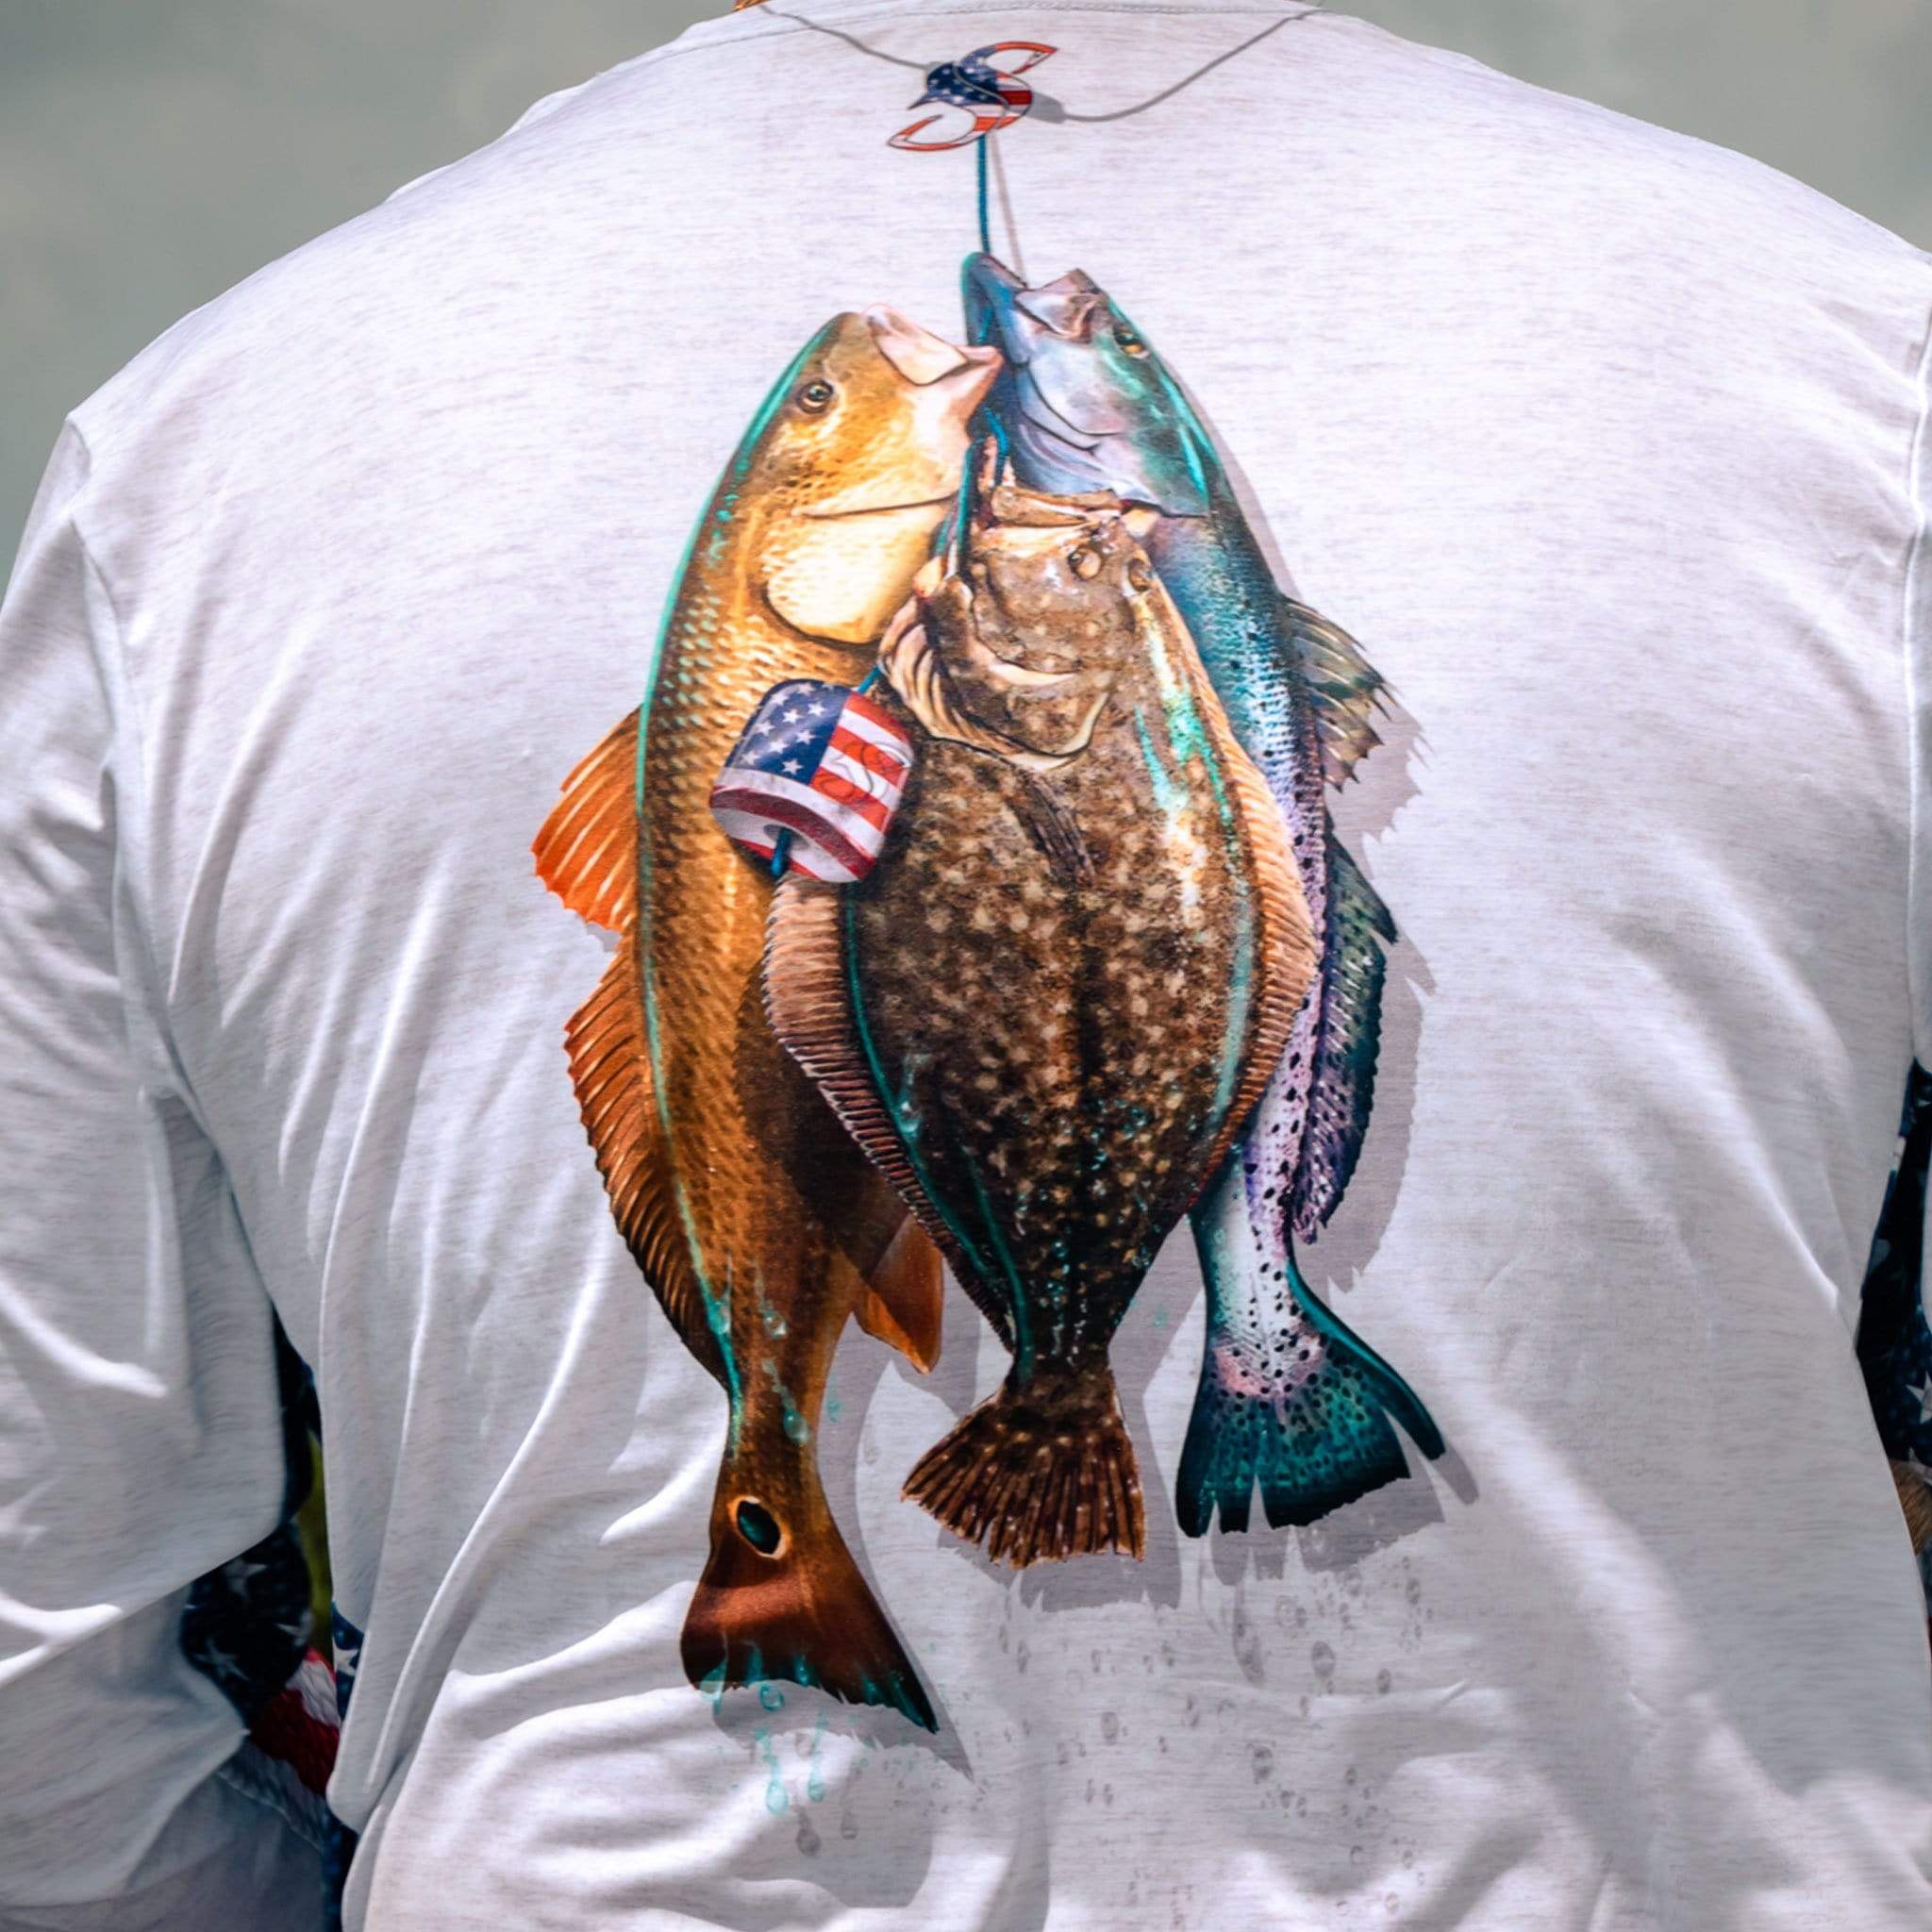 Largemouth bass fishing Custom Name sun protection long sleeve